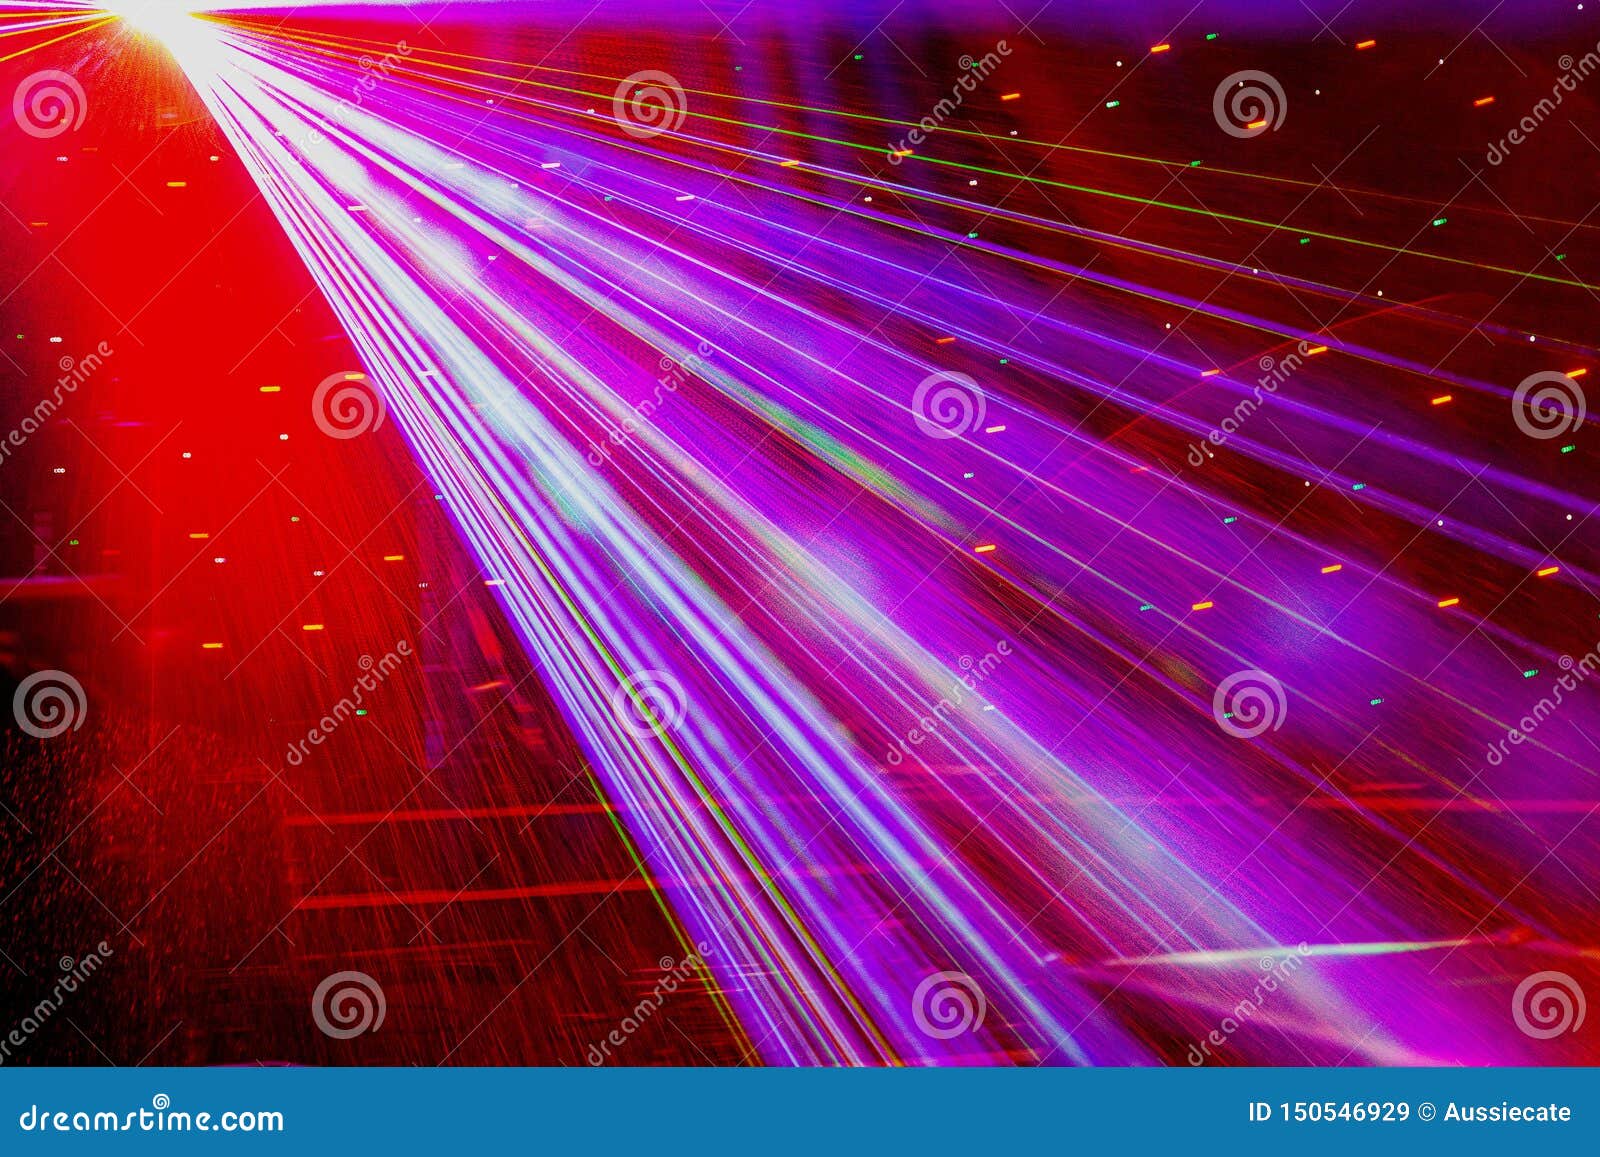 bright nightclub red laser lights cutting through smoke machine smoke making light and rainbow patterns on the dance floor.